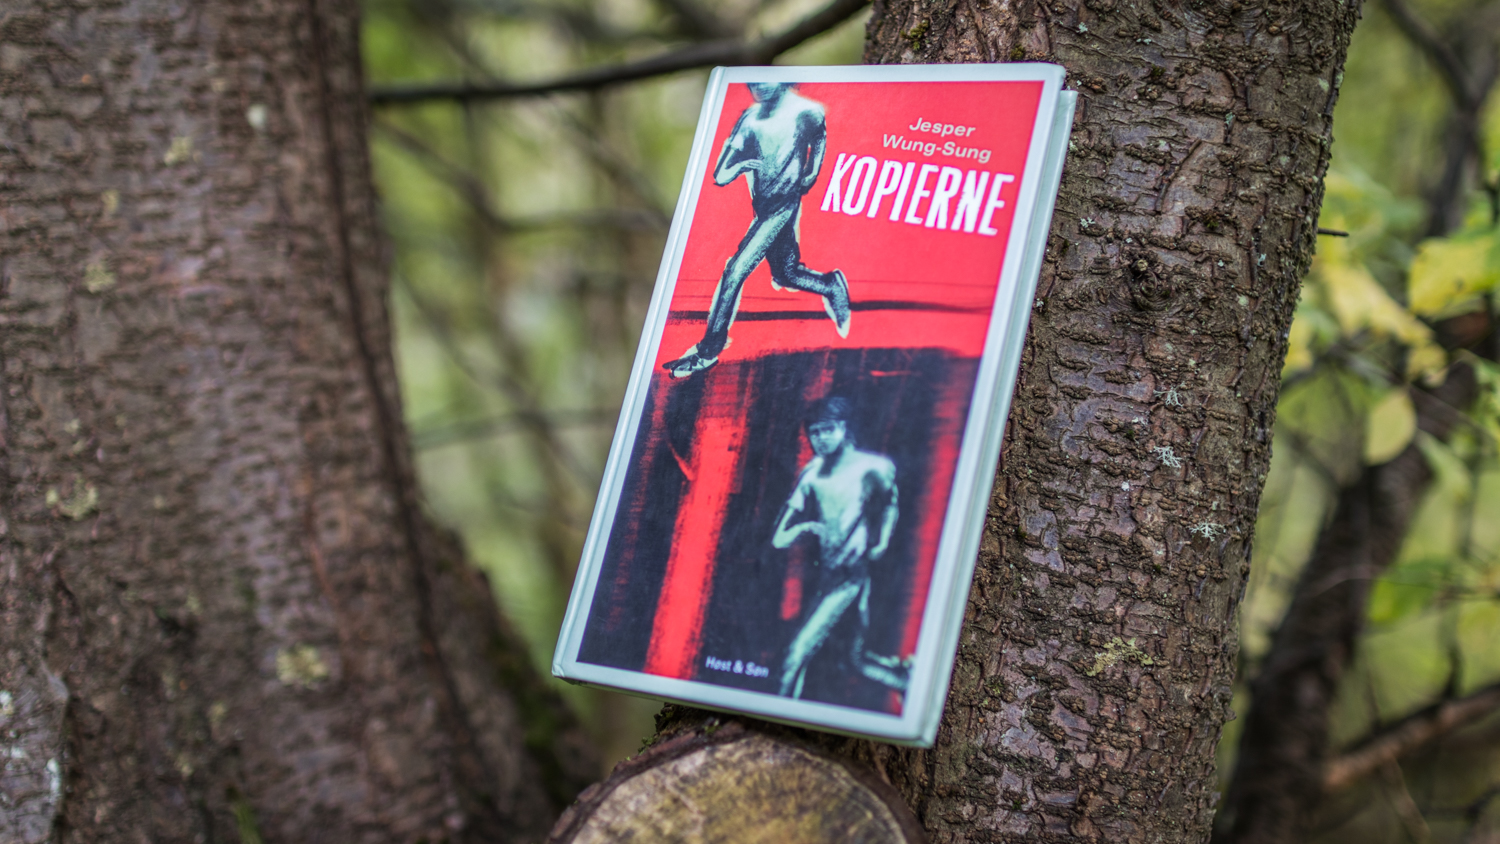 The Danish book "Kopierne" in a tree.